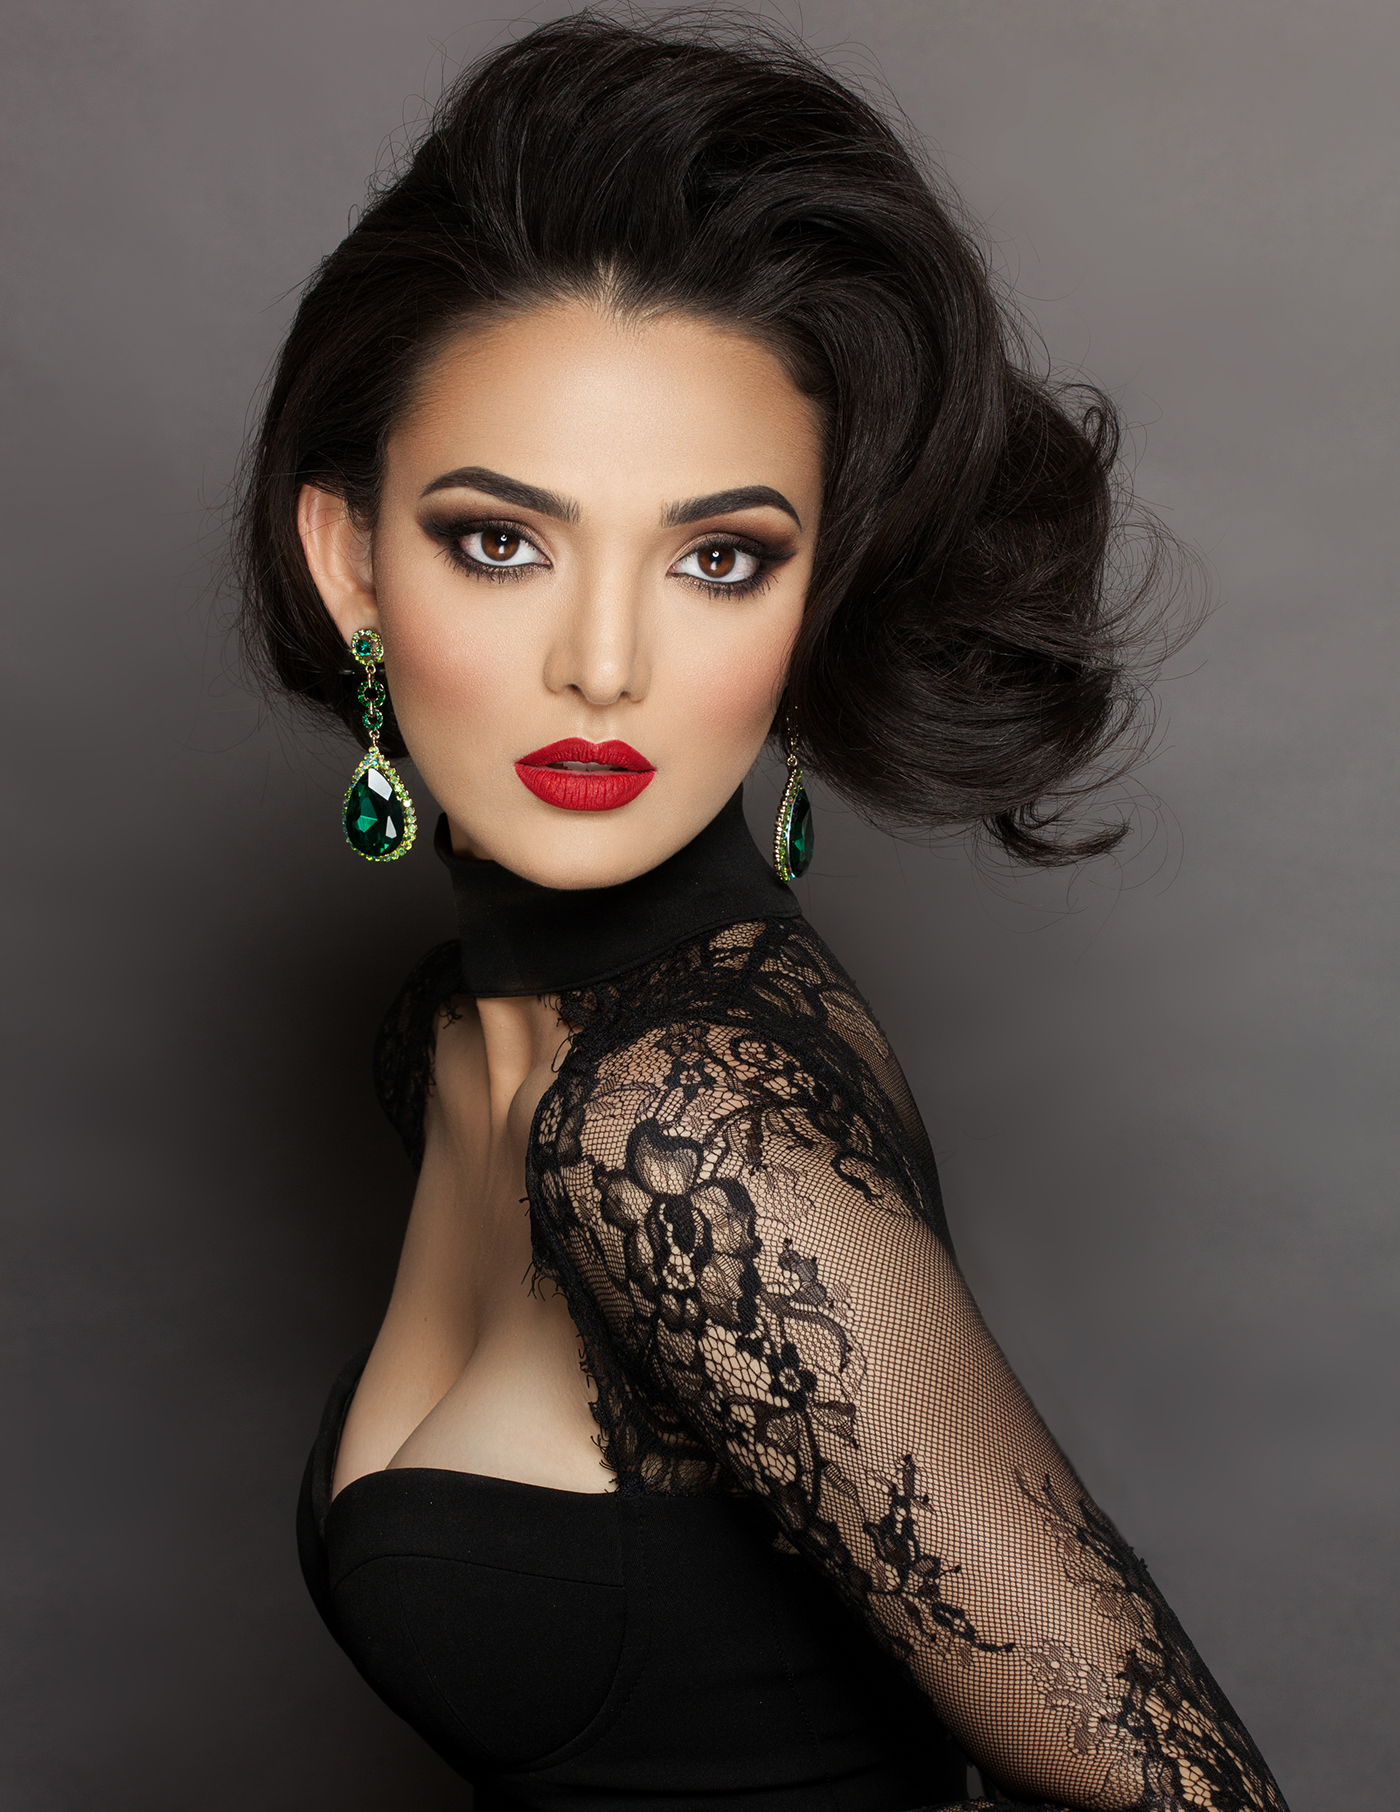 Model - Alejandra Gonzalez. 